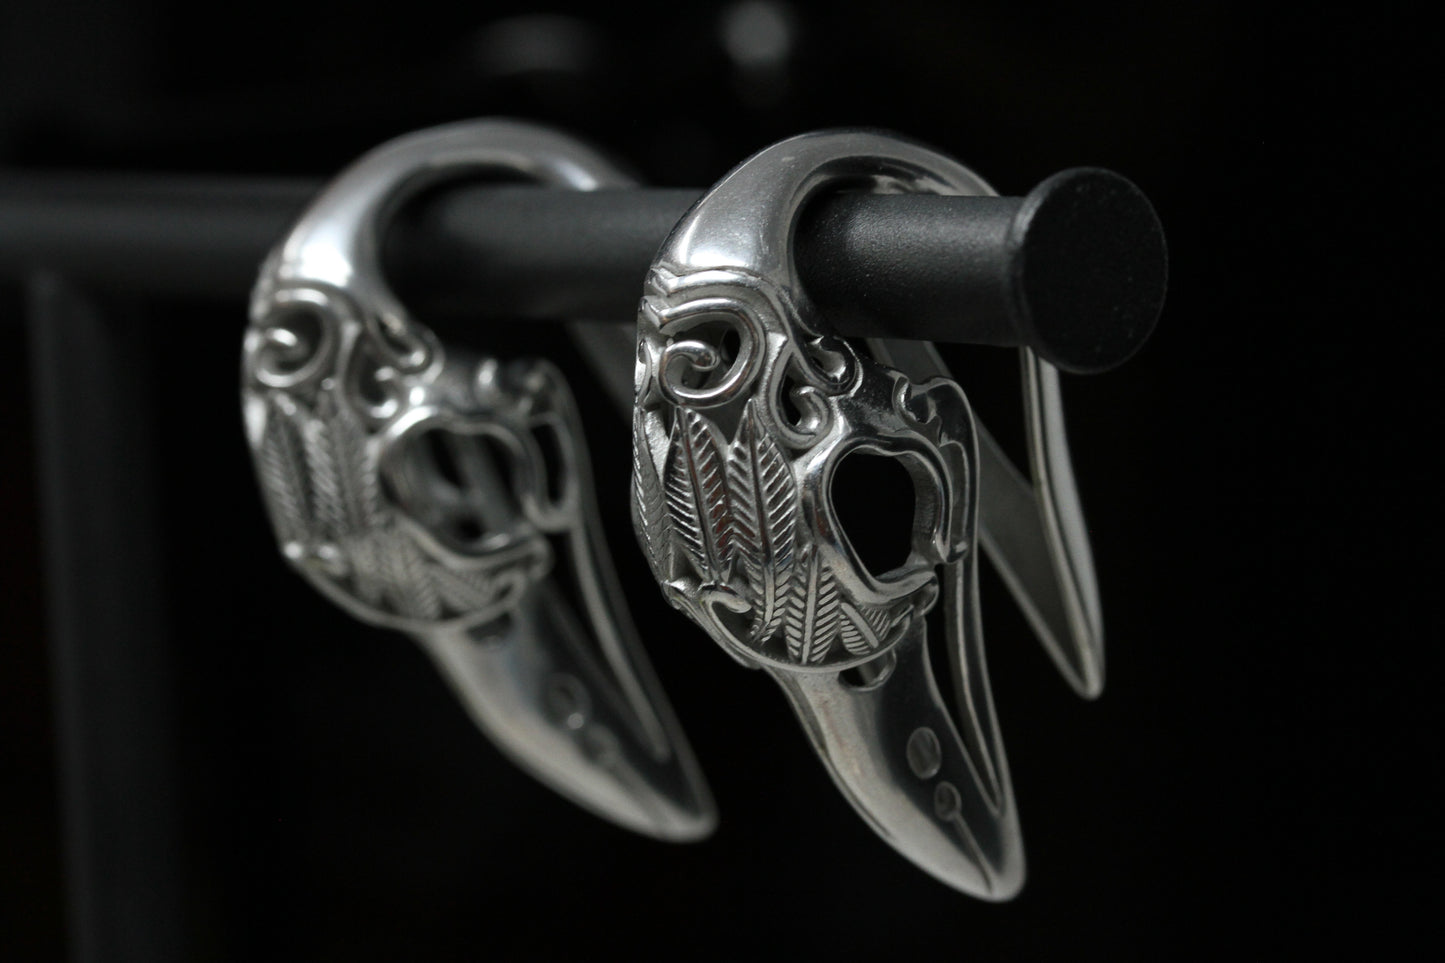 weight gauges - silver bird skull